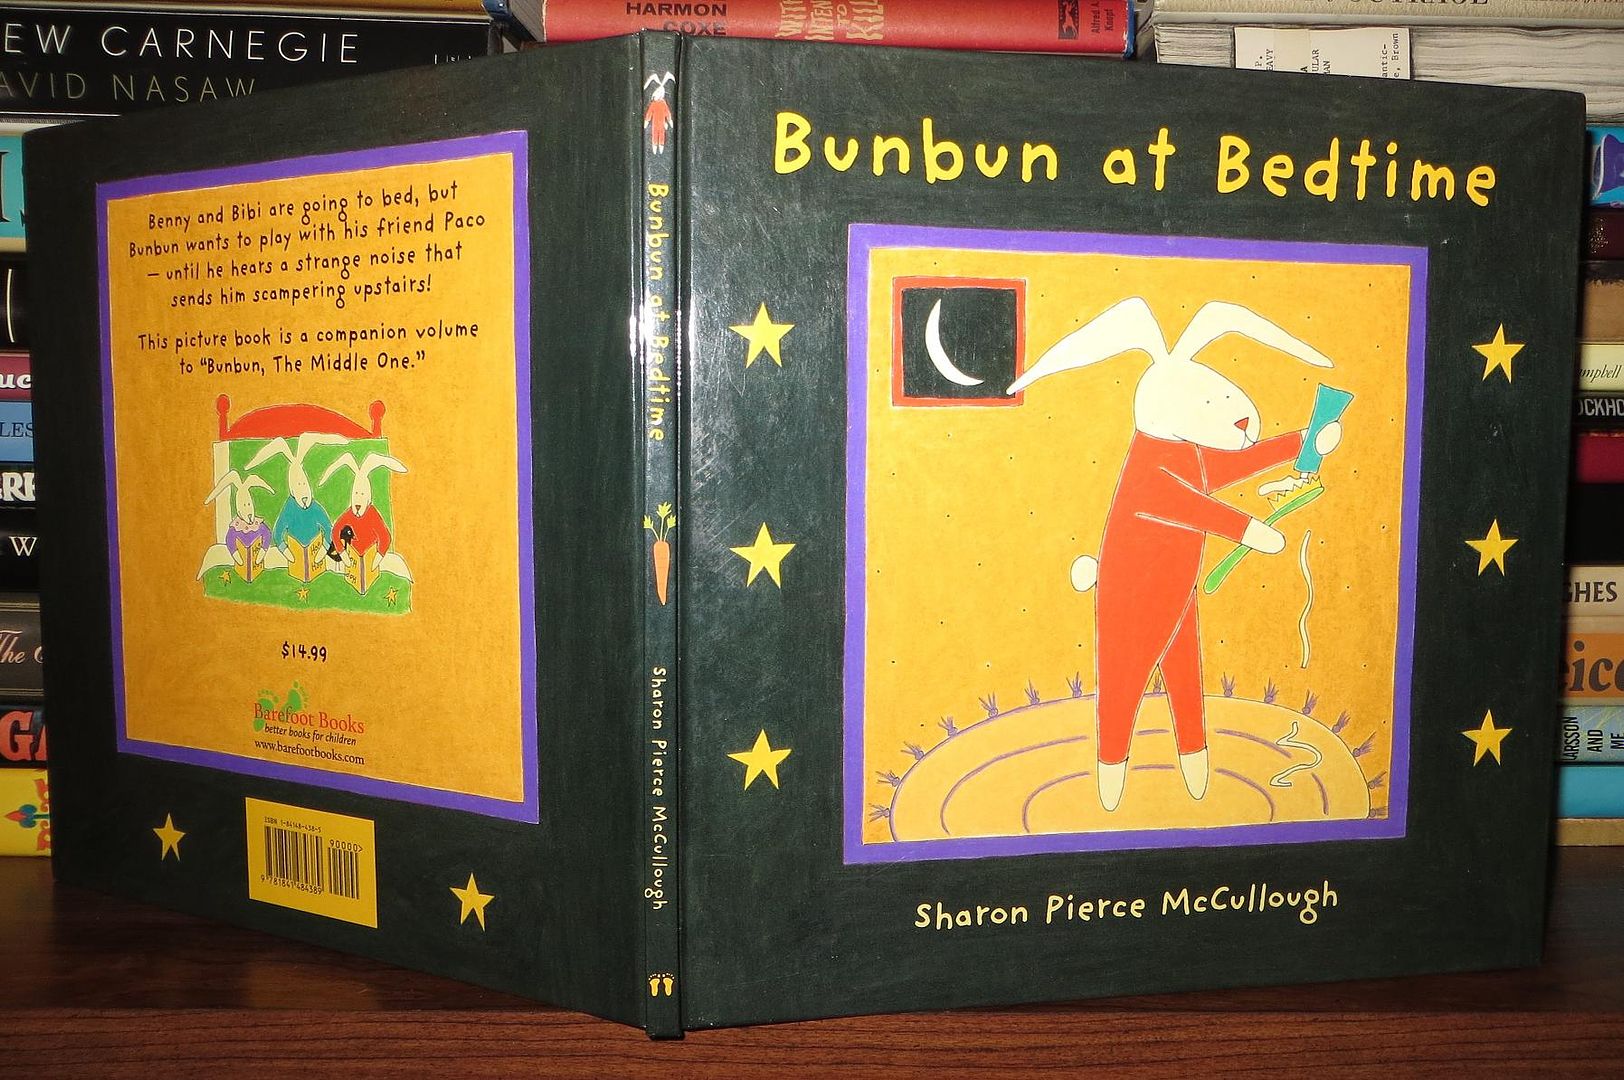 MCCULLOUGH, SHARON PIERCE - Bunbun at Bedtime